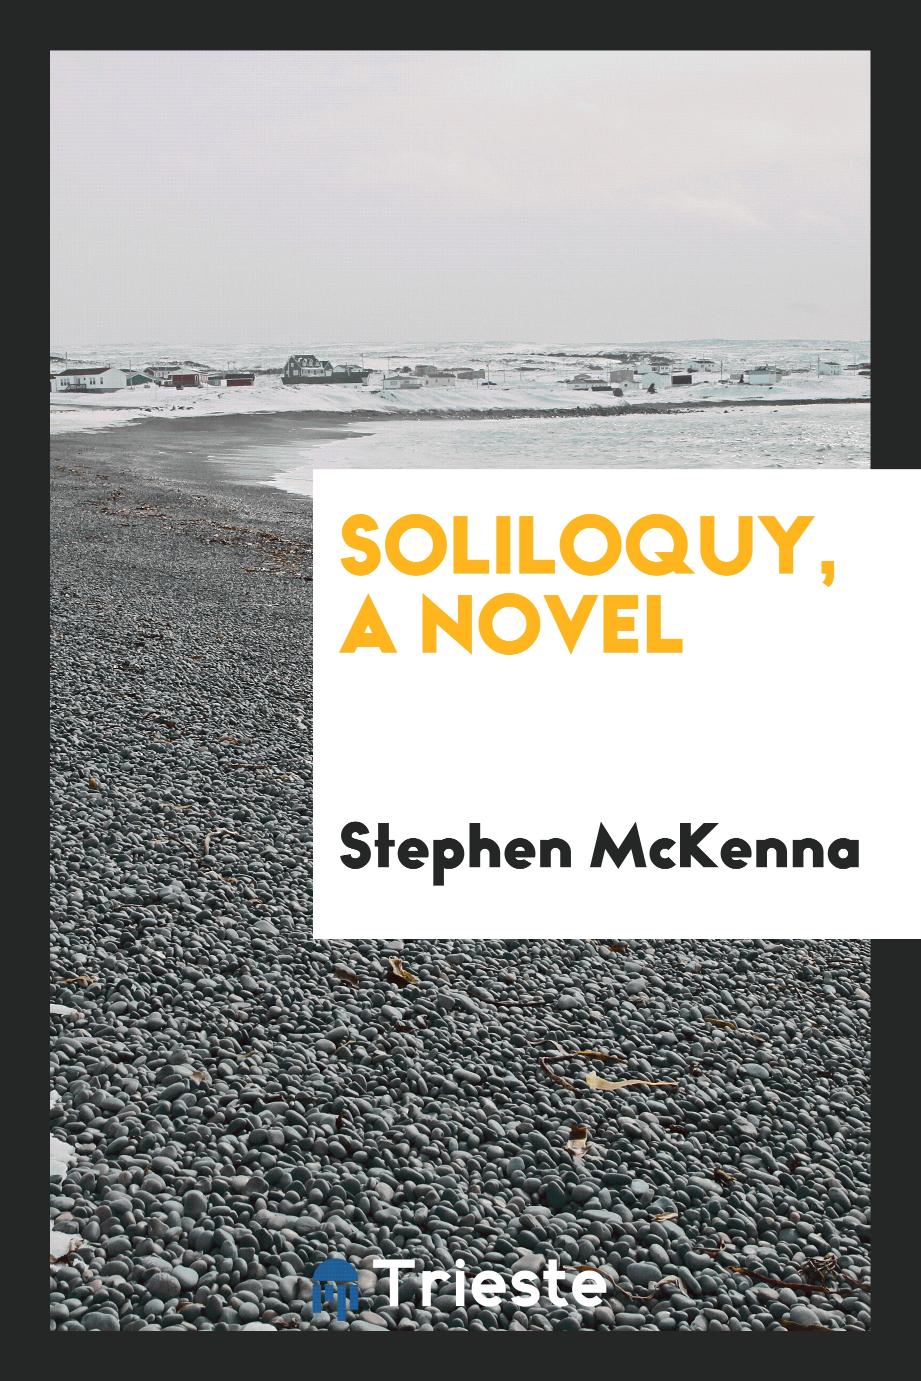 Soliloquy, a novel